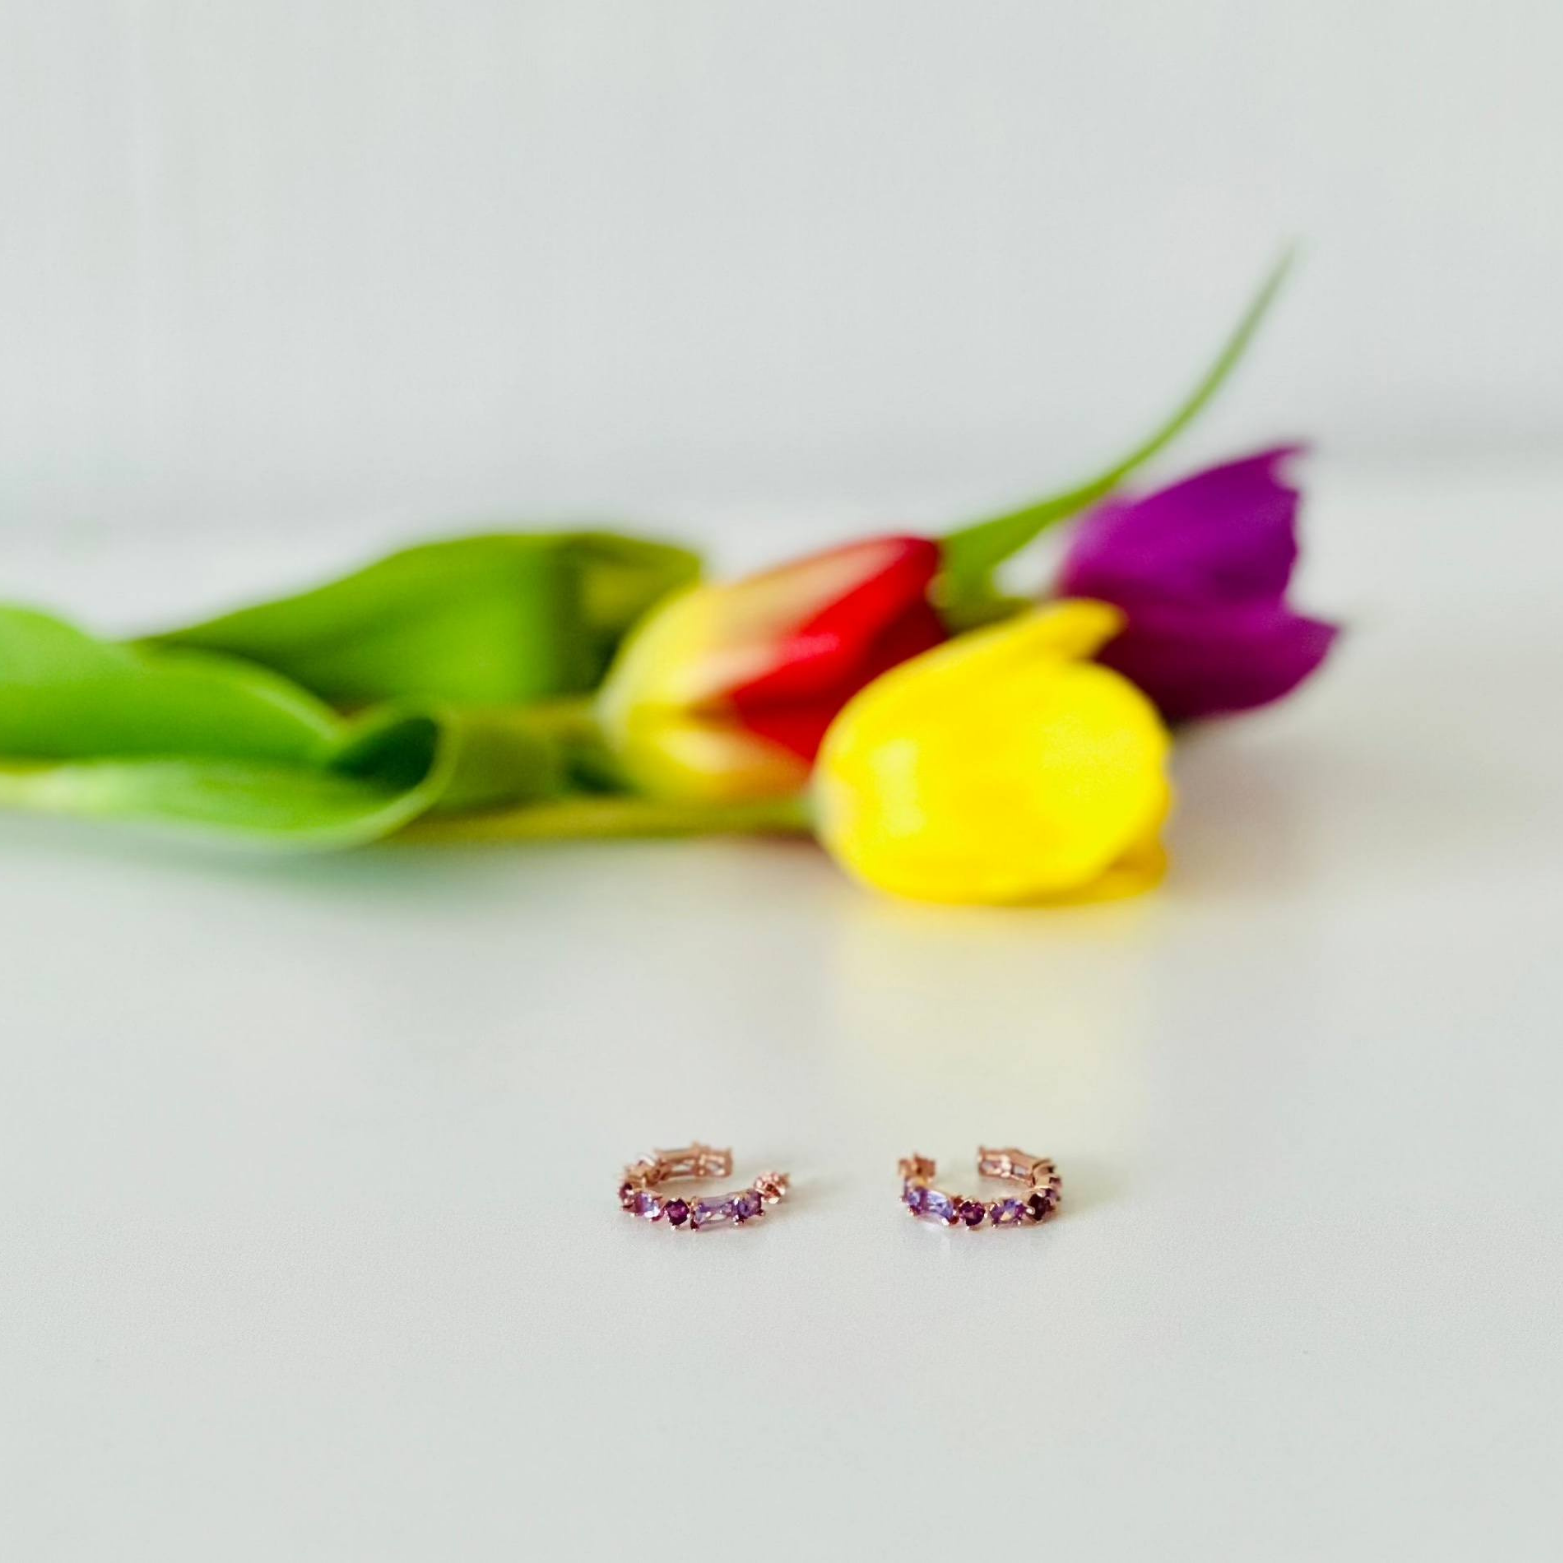 Wang-bi 18k Rose Gold Vermeil Earrings on white background with flowers- KORYANGS Brand